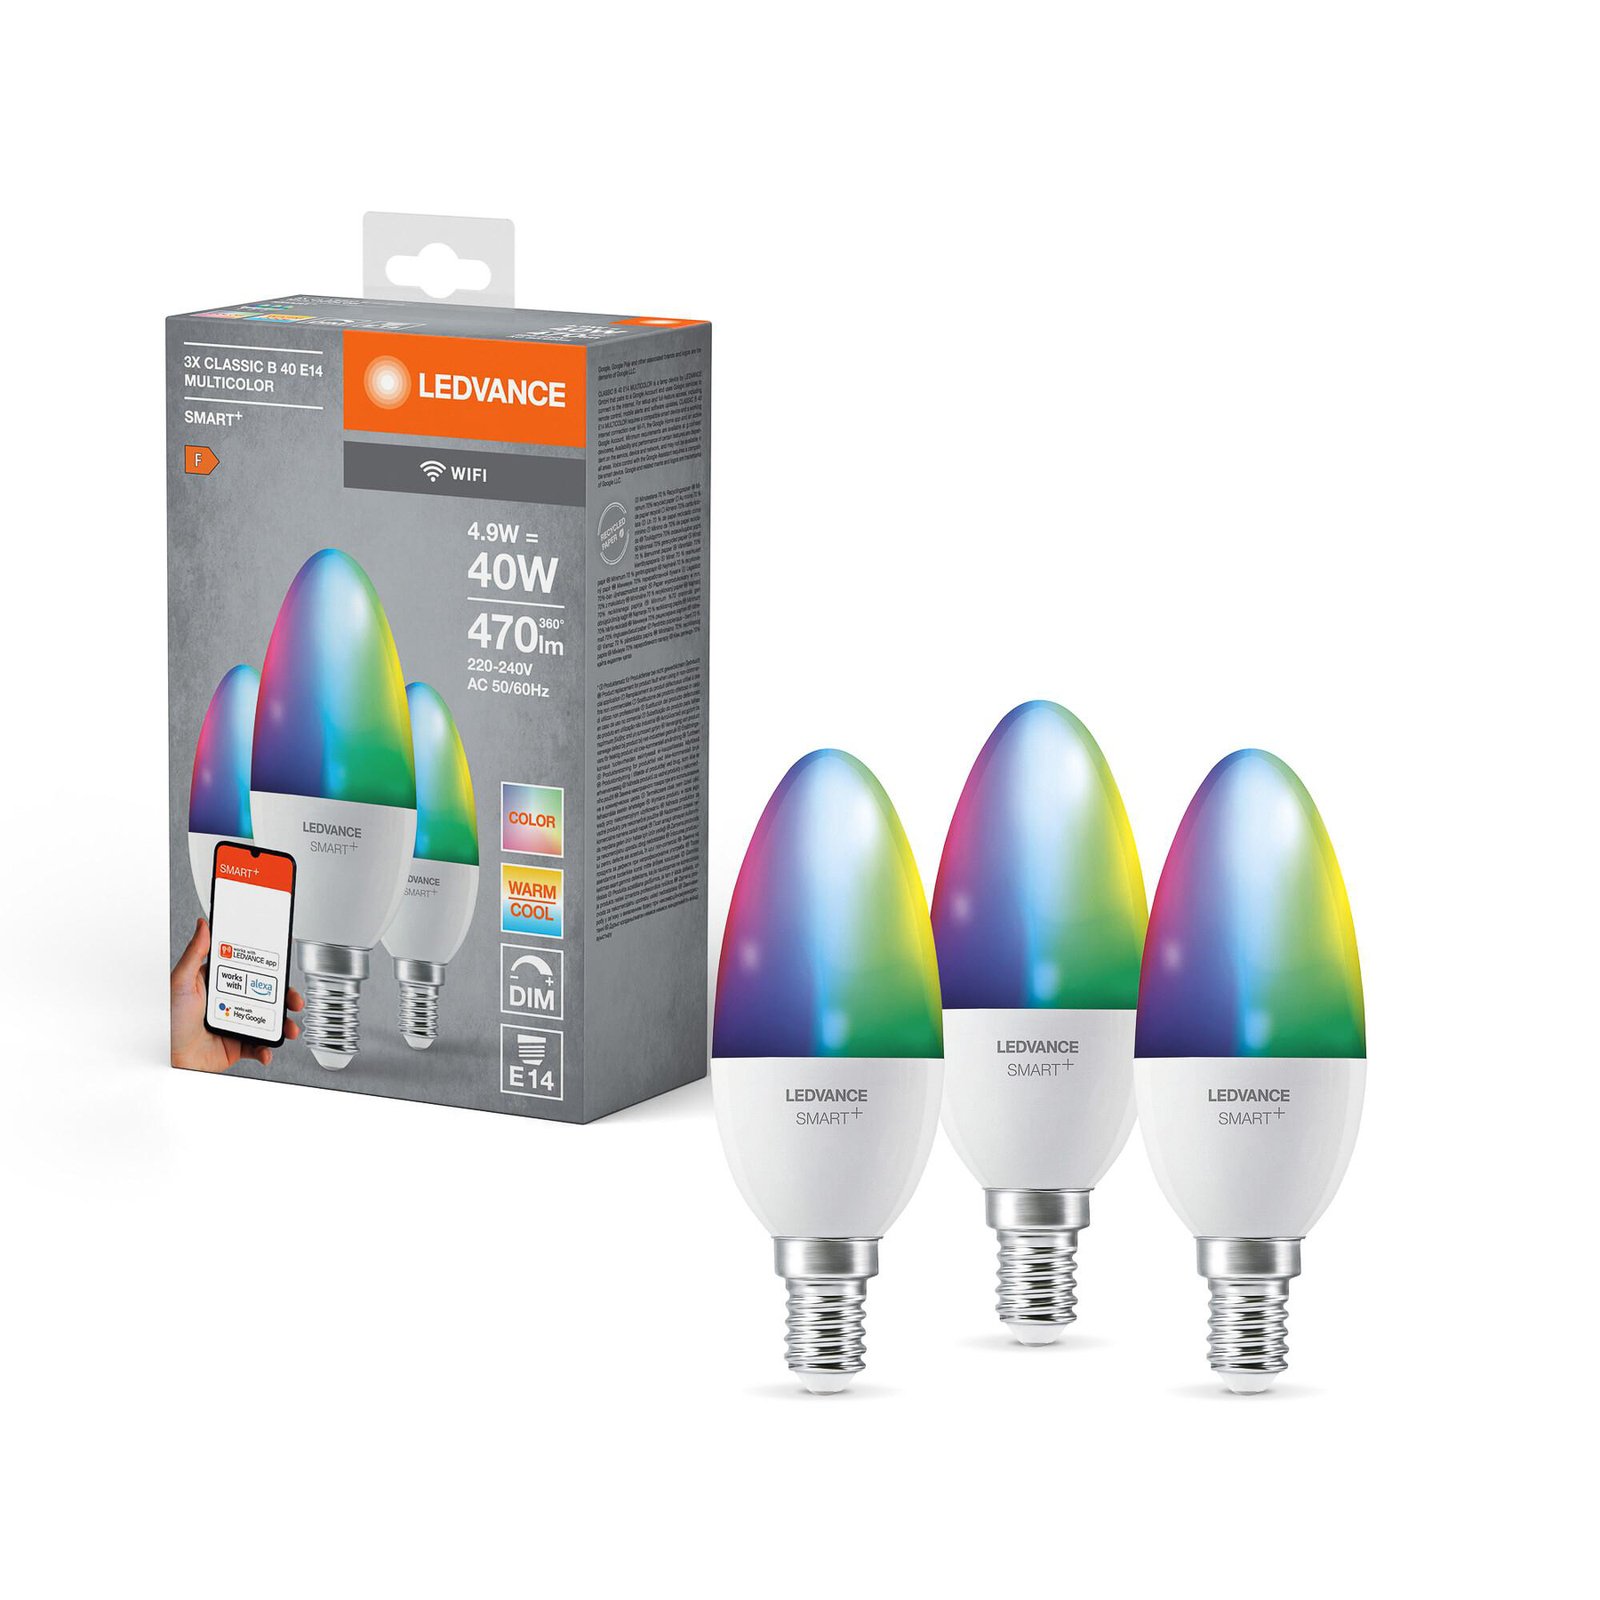 LEDVANCE SMART+ LED, candle, E14, 4.9 W, CCT, RGB, WiFi, 3 units